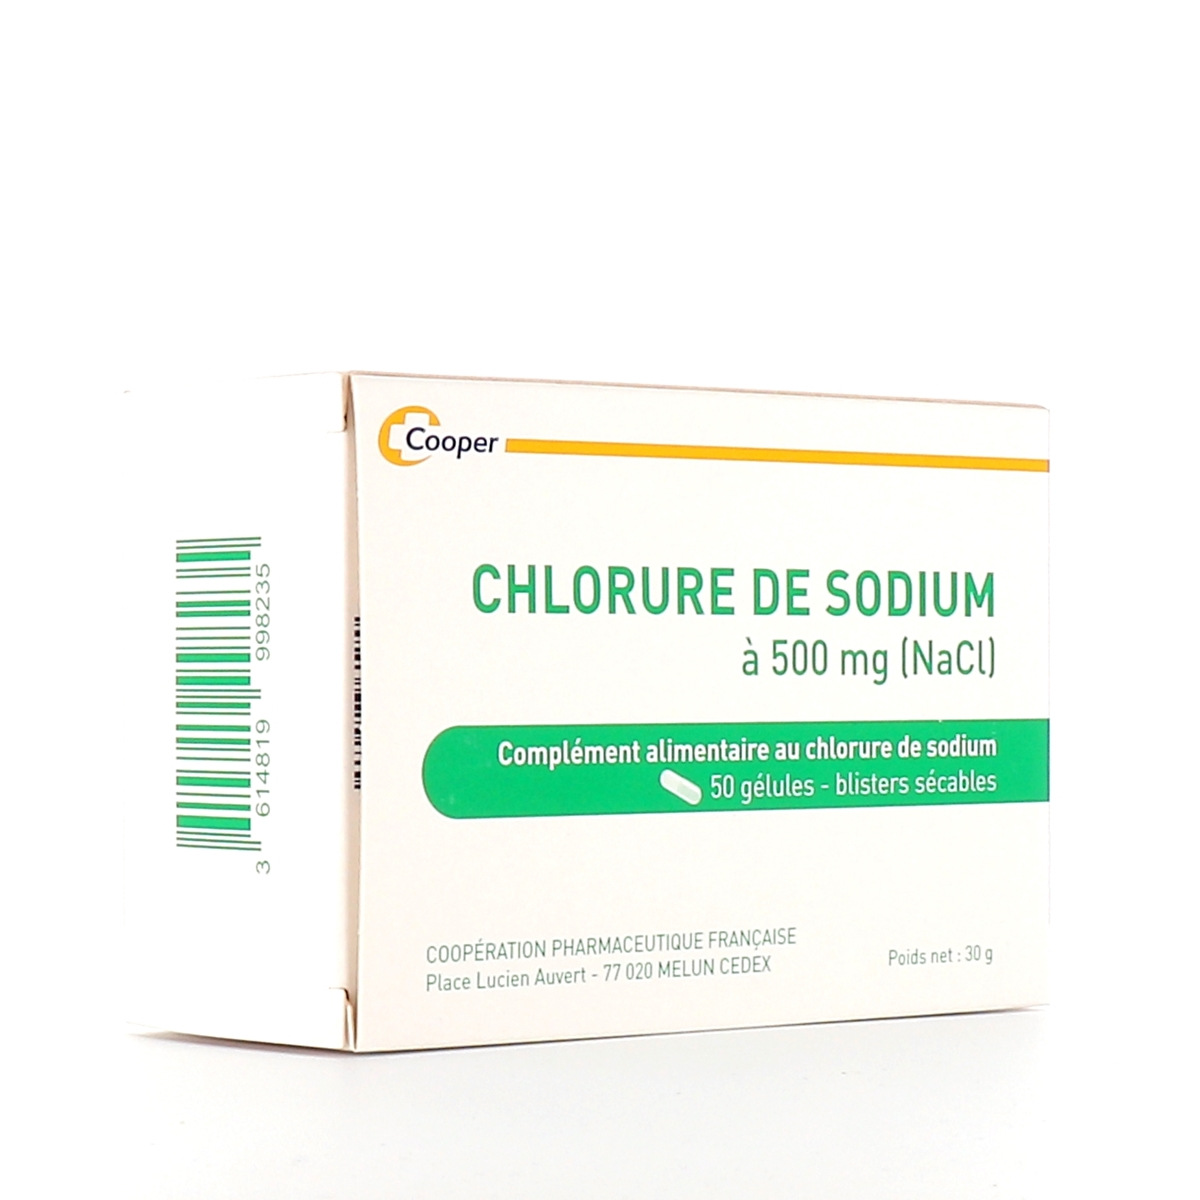 Chlorure de sodium Cooper